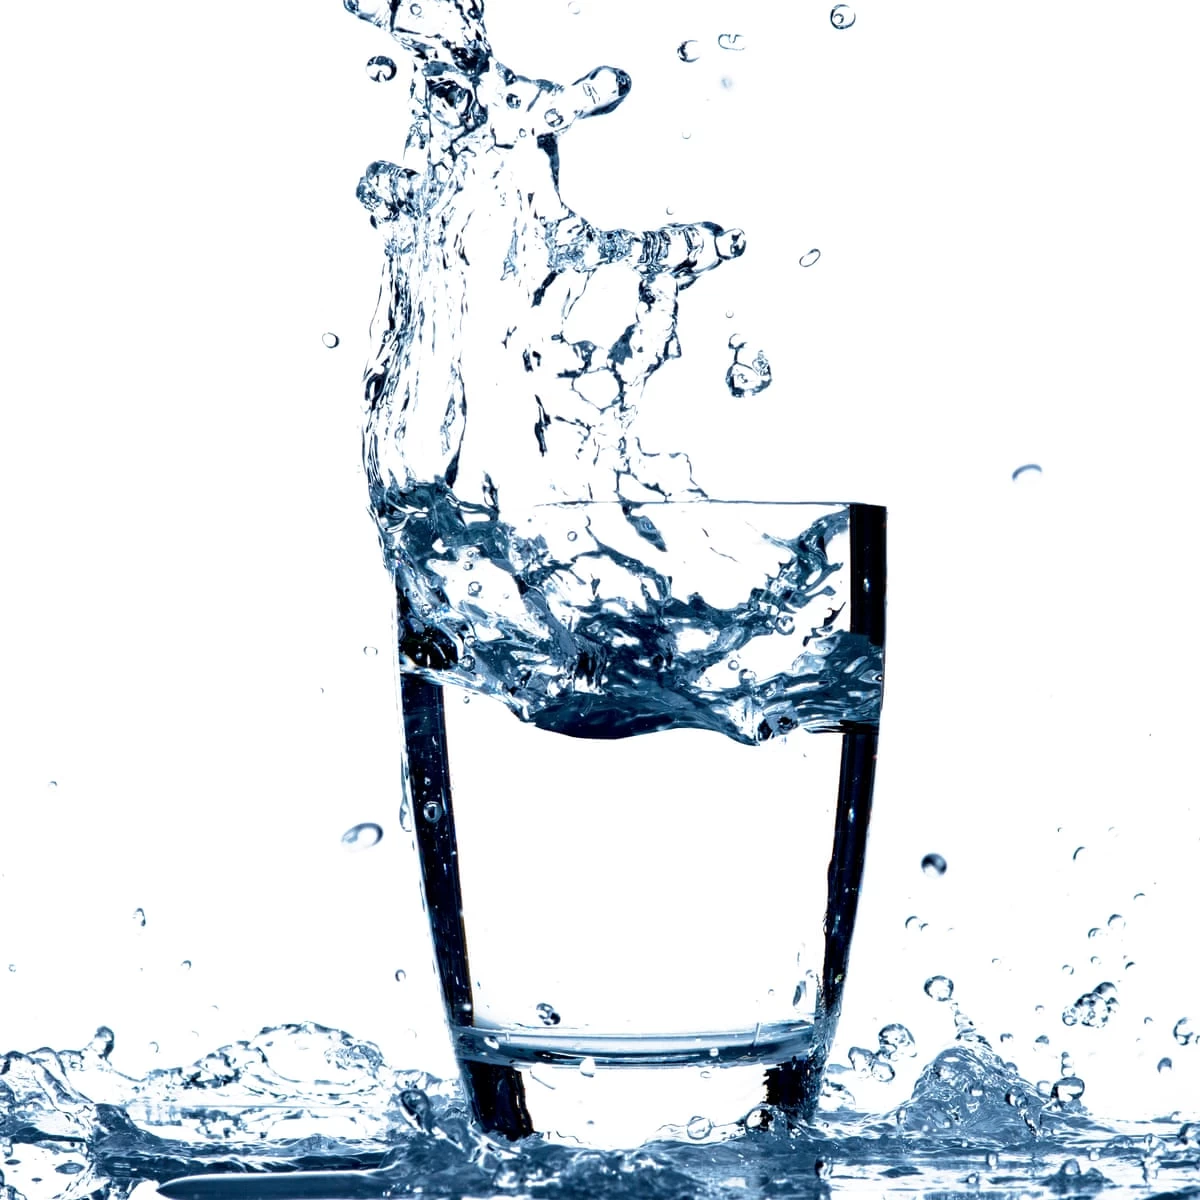 Top five health benefits of drinking water